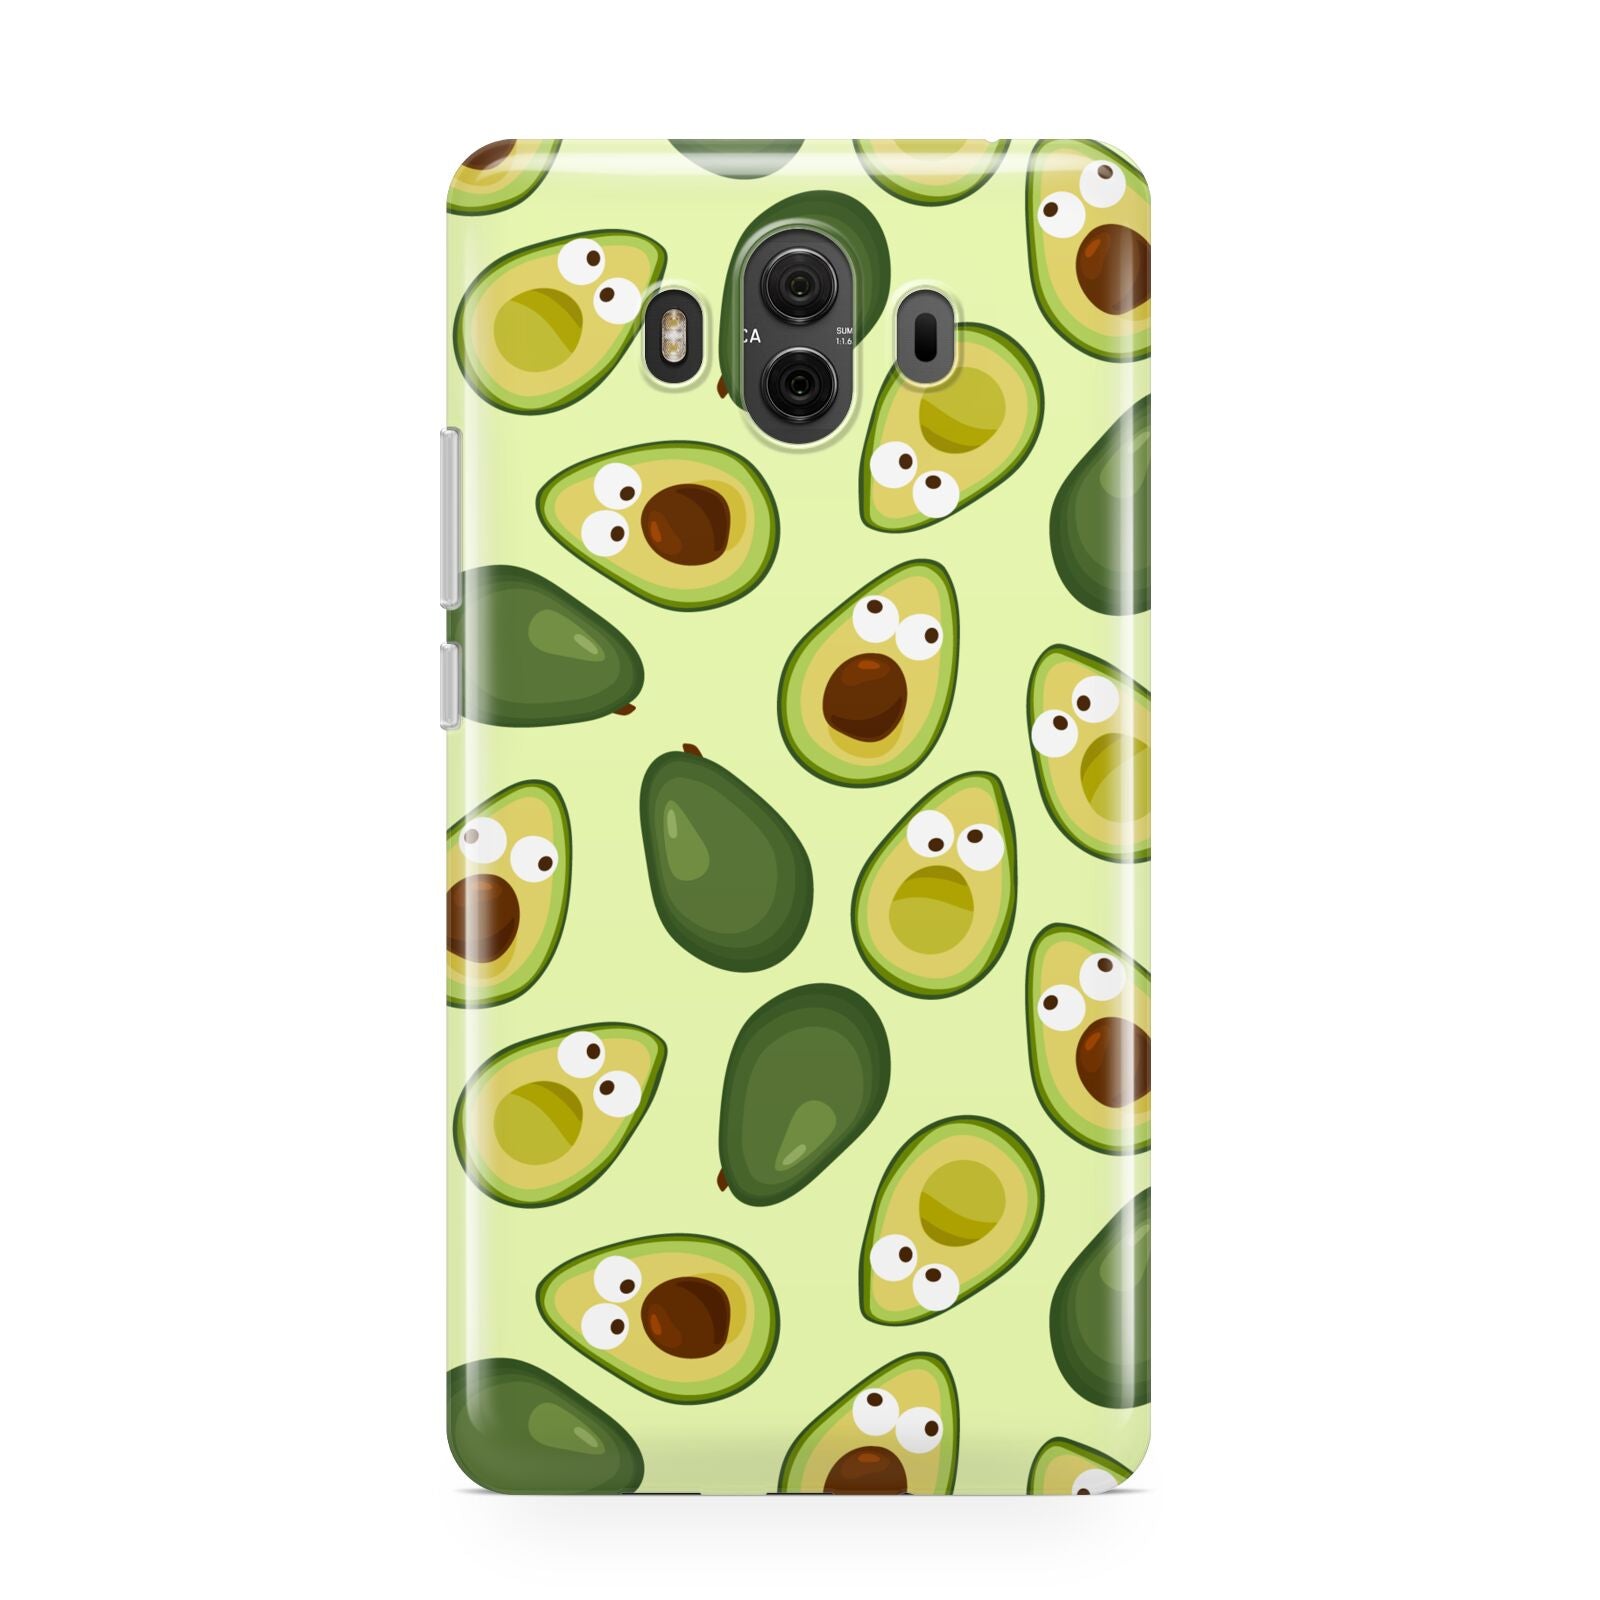 Avocado Huawei Mate 10 Protective Phone Case